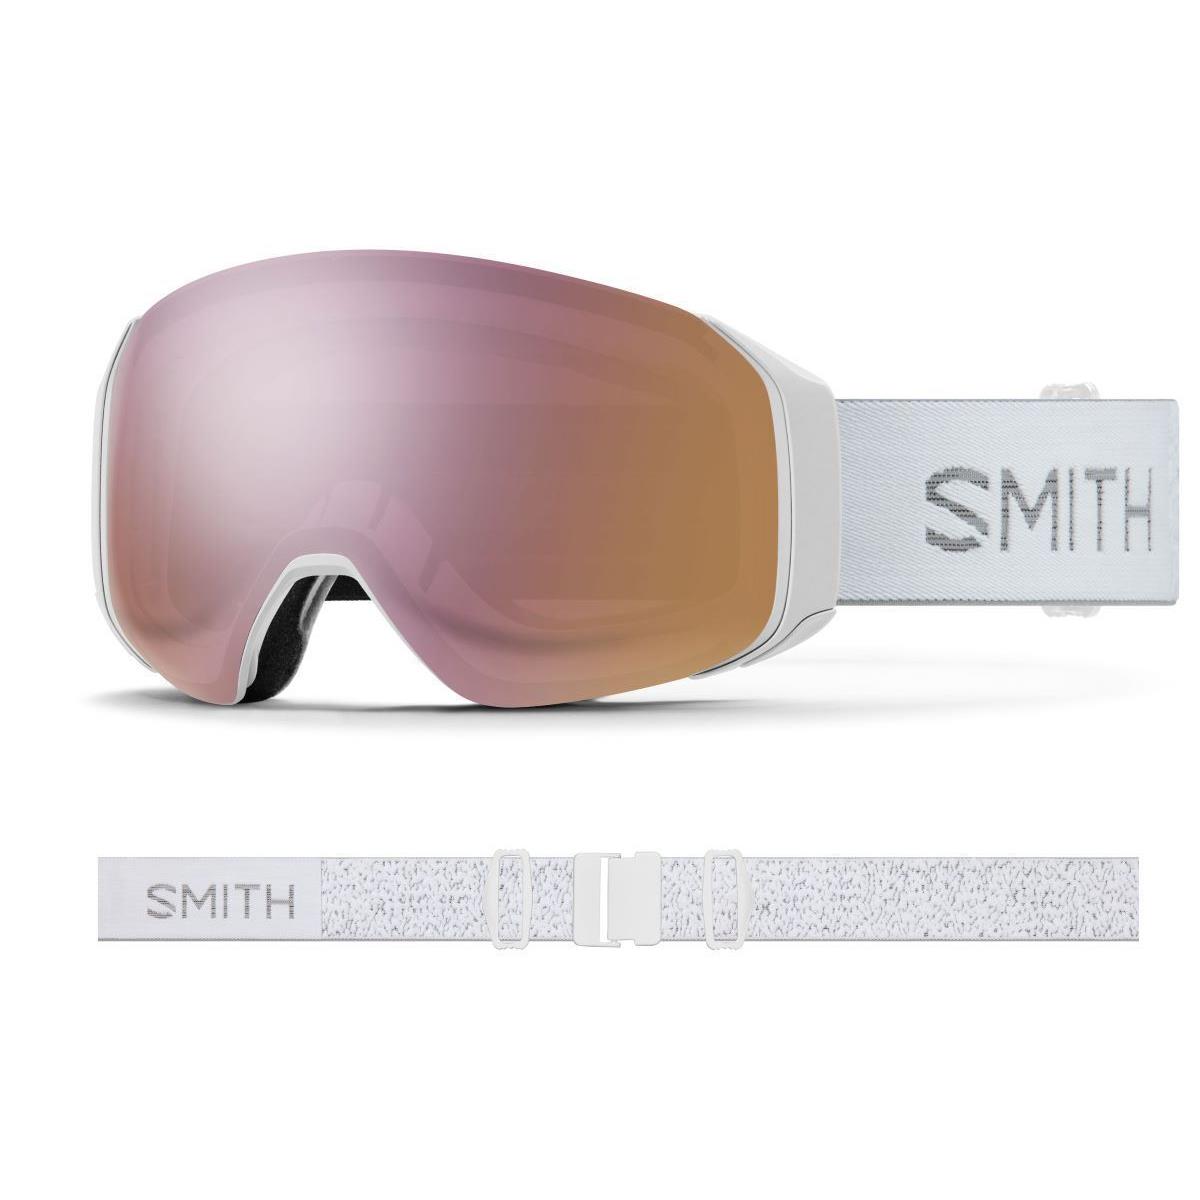 Smith 4D Mag S Ski Goggles 2 Premium Lenses Included Authorized Smith Dealer - Frame: , Lens: